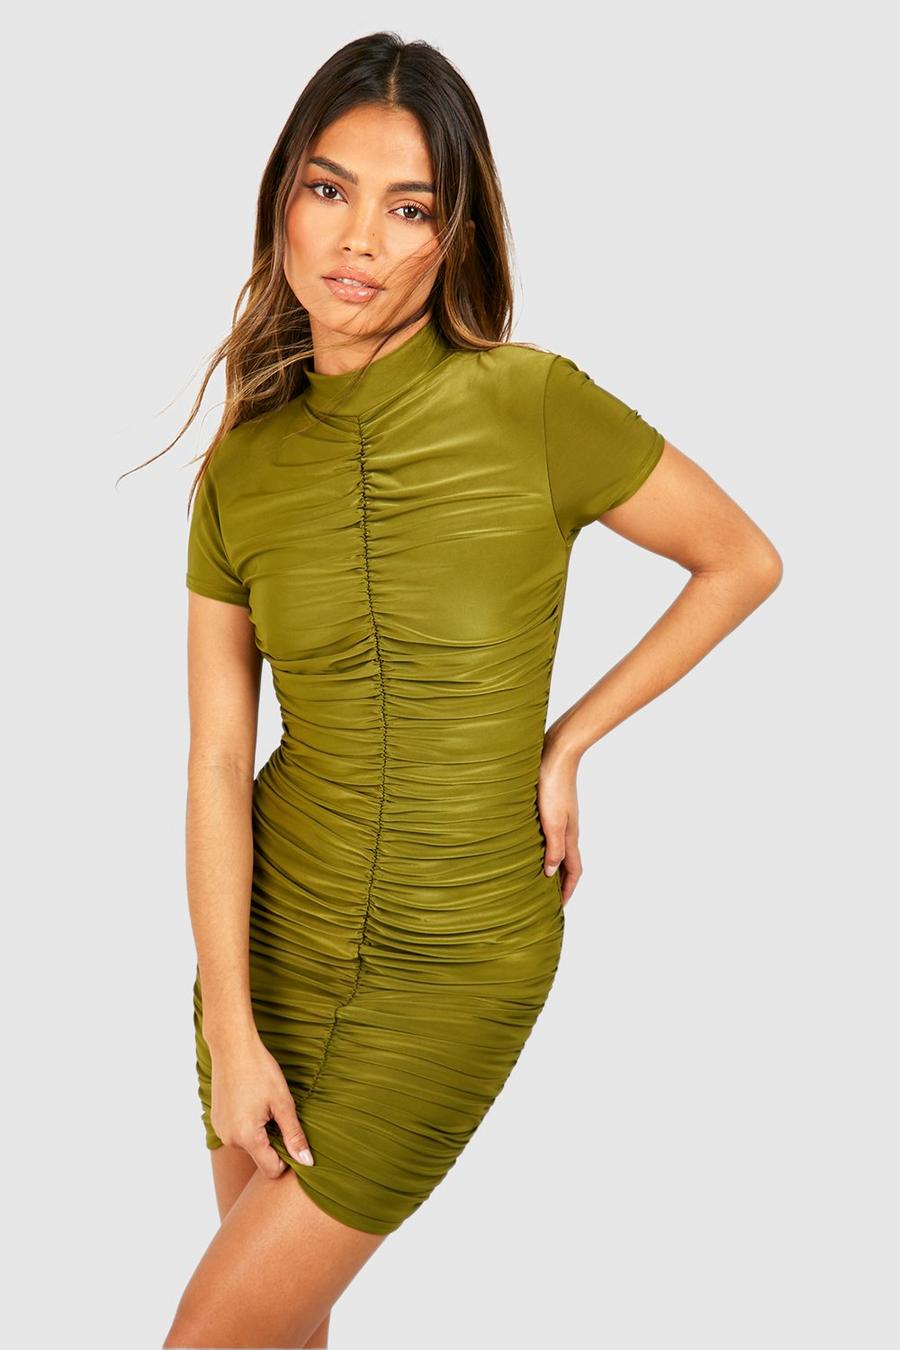 SALE! Orange or Green Customizable Solid Color Slinky Plus Size Dresses -  Tops & Skirts! 0x 1x 2x 3x 4x 5x 6x 7x 8x